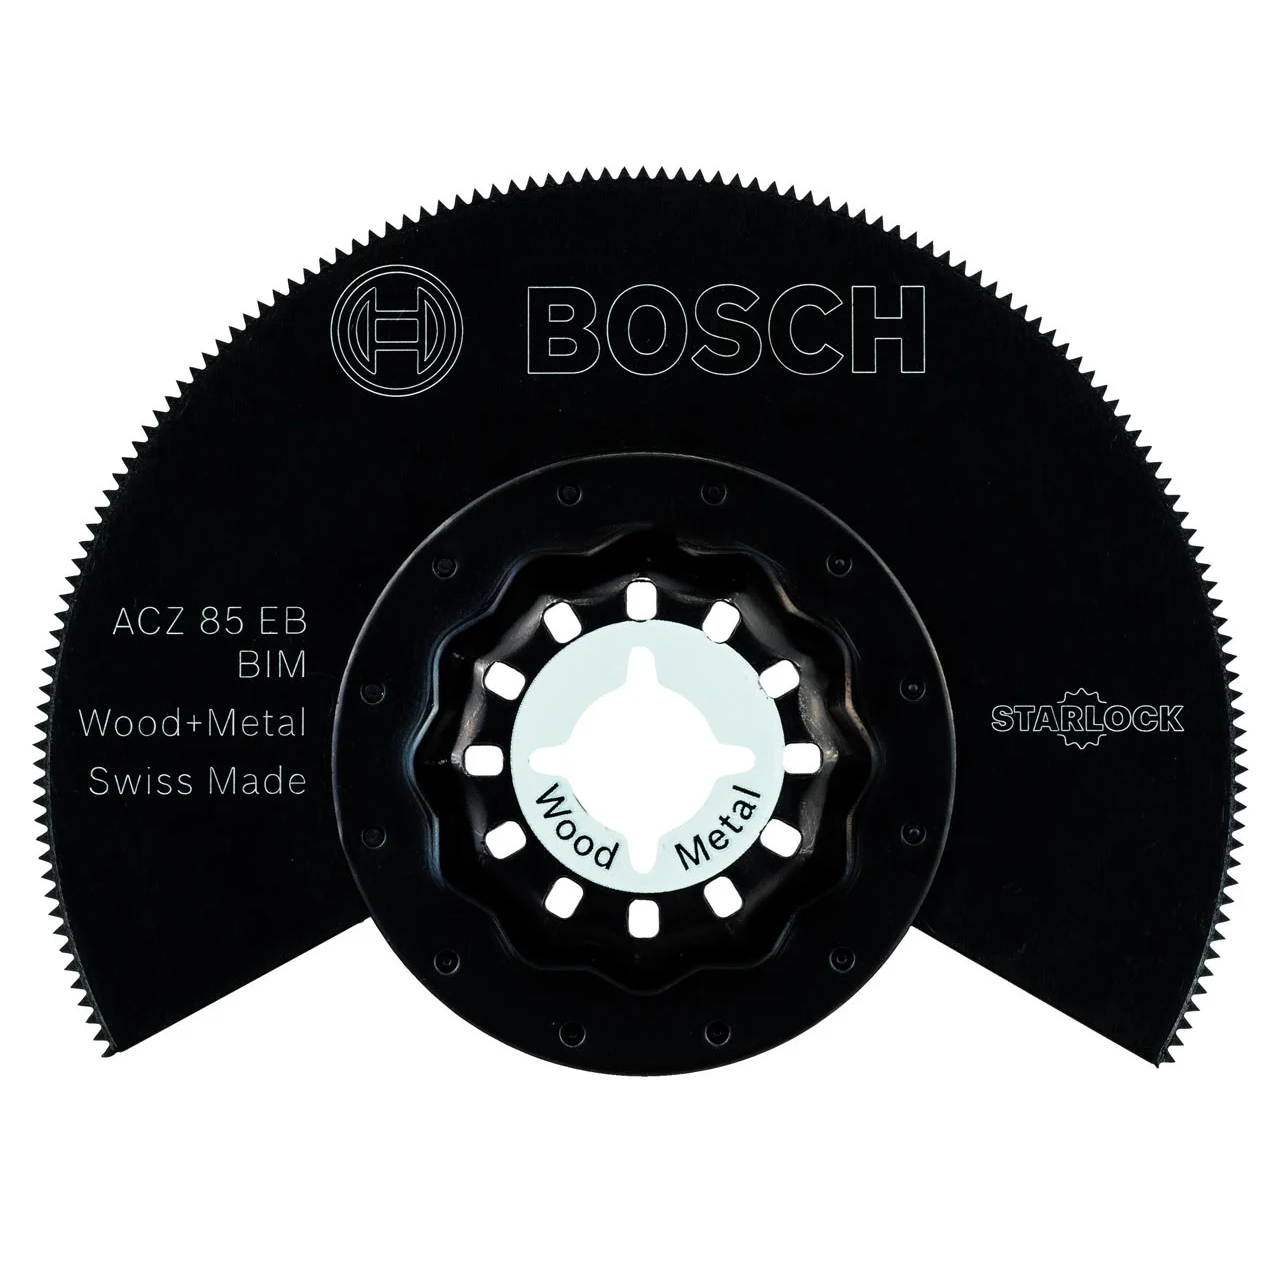 Bosch Starlock ACZ 85 EB (BIM) Multi Tool Blade 2608661636 Power Tool Services